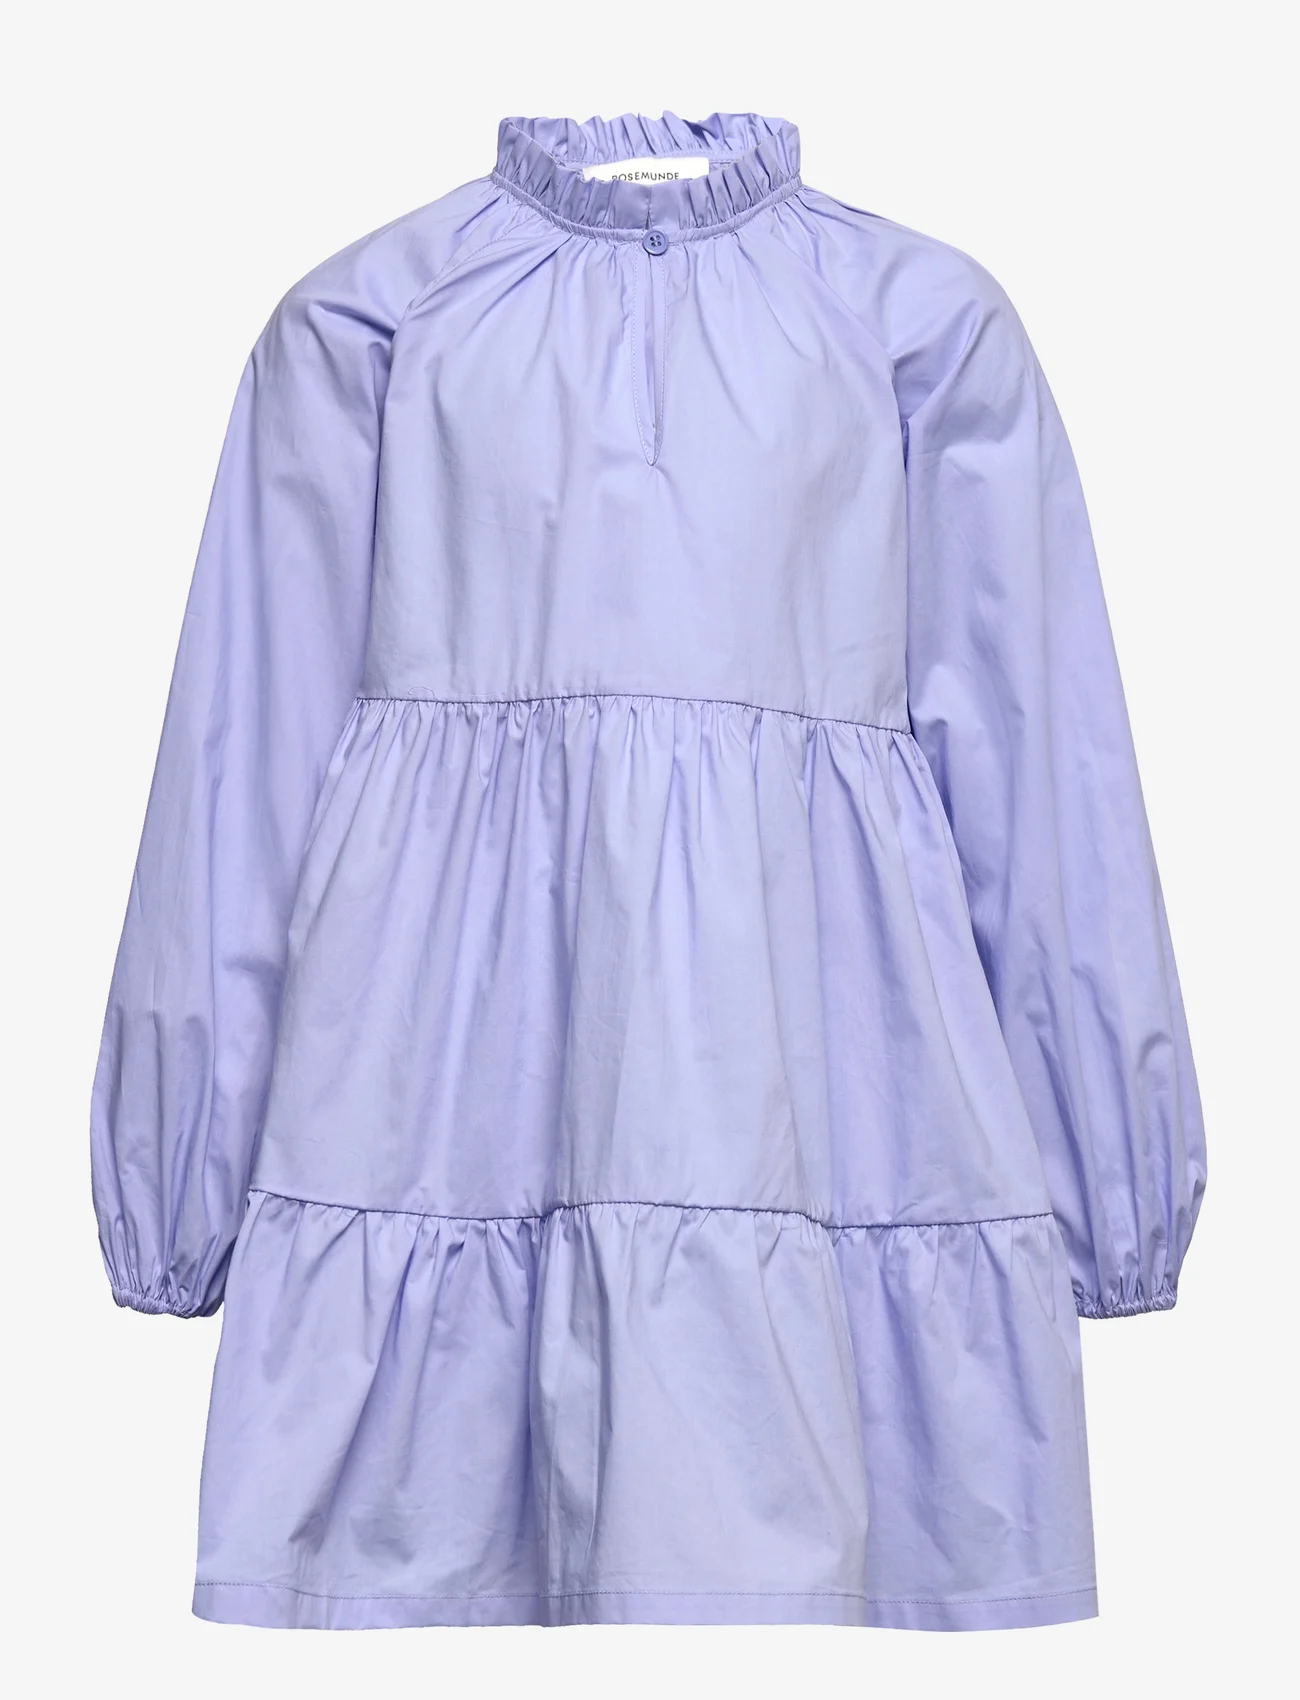 Rosemunde Kids - Dress - sukienki eleganckie - blue heaven - 0